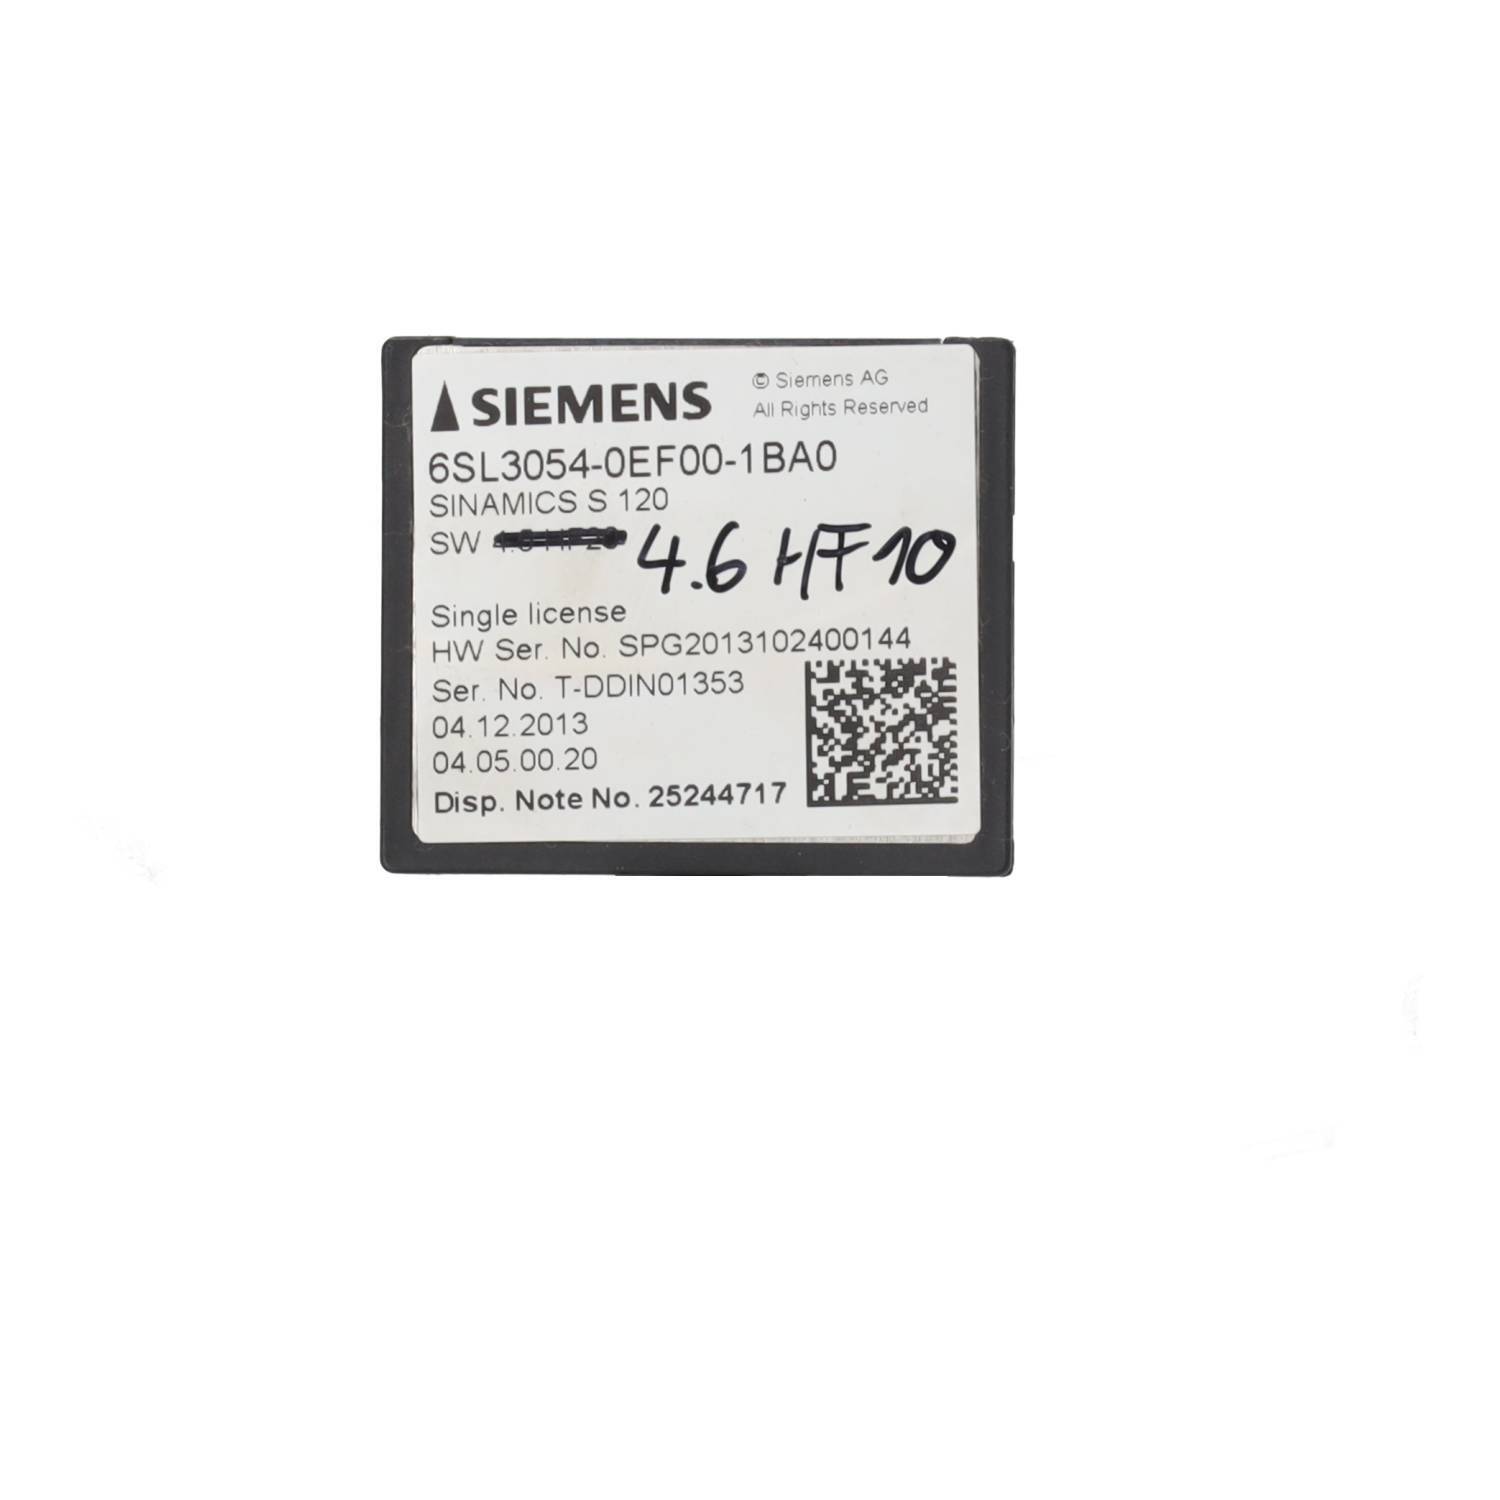 Siemens Sinamics S120 CompactFlash Card 6SL3054-0EF00-1BA0